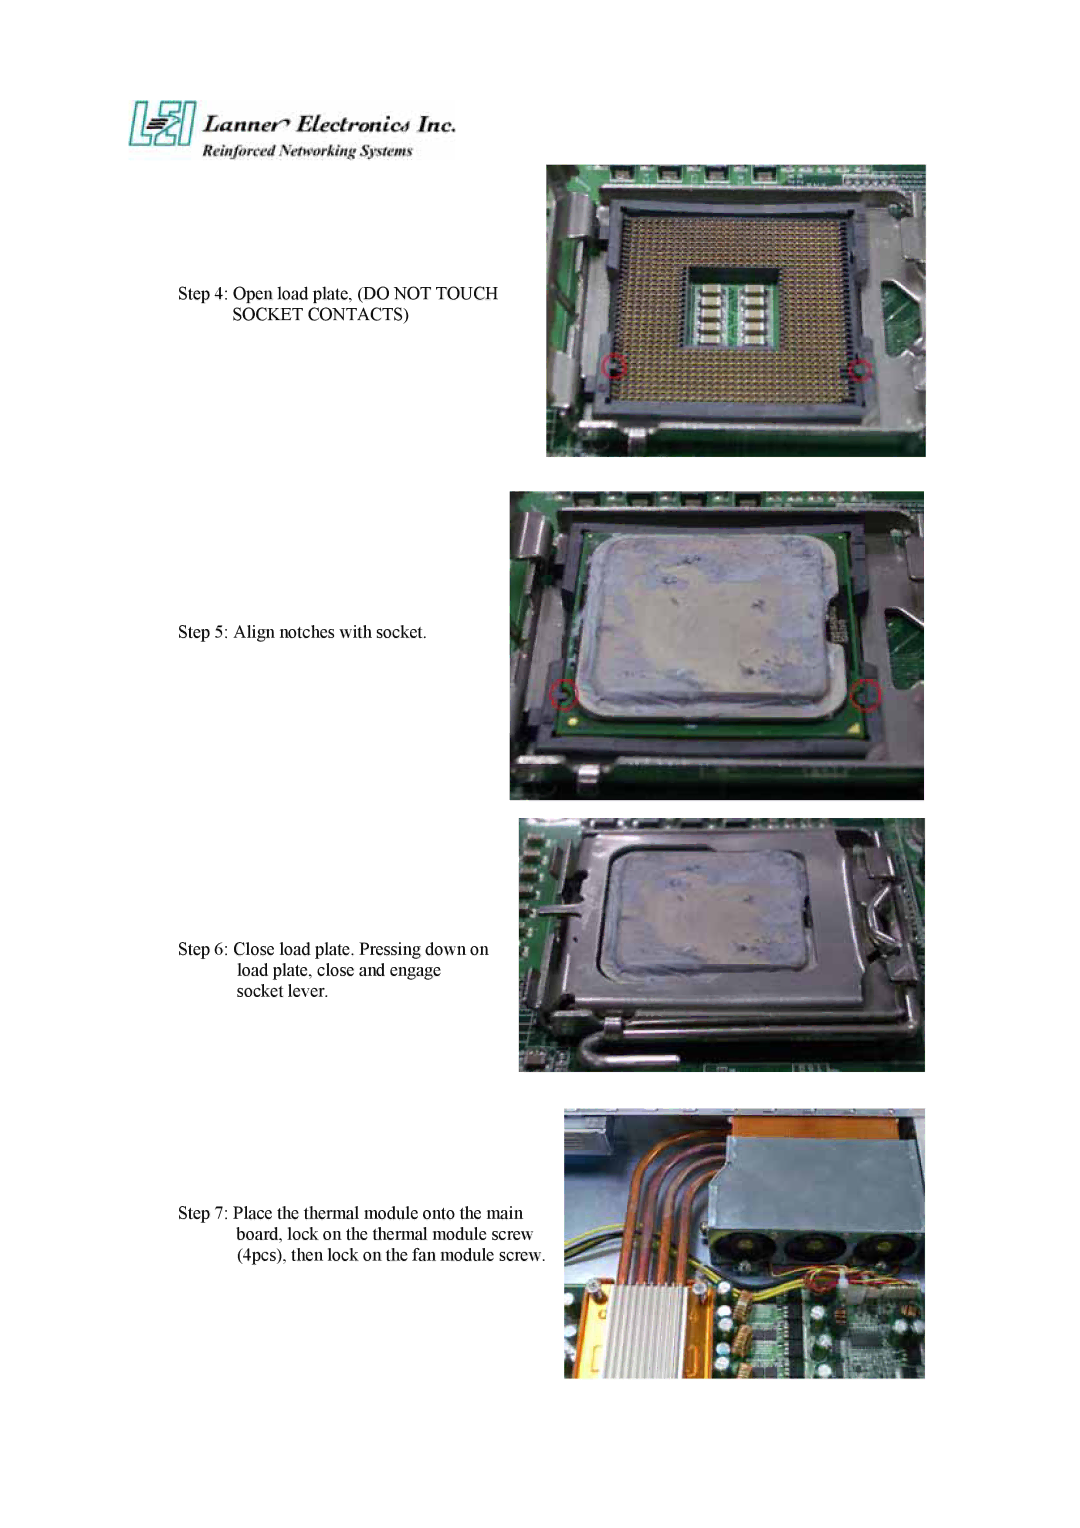 Lanner electronic 19" 1U Intel Pentium 4 Socket T Rackmount Network Security Platform, FW-7870 user manual 